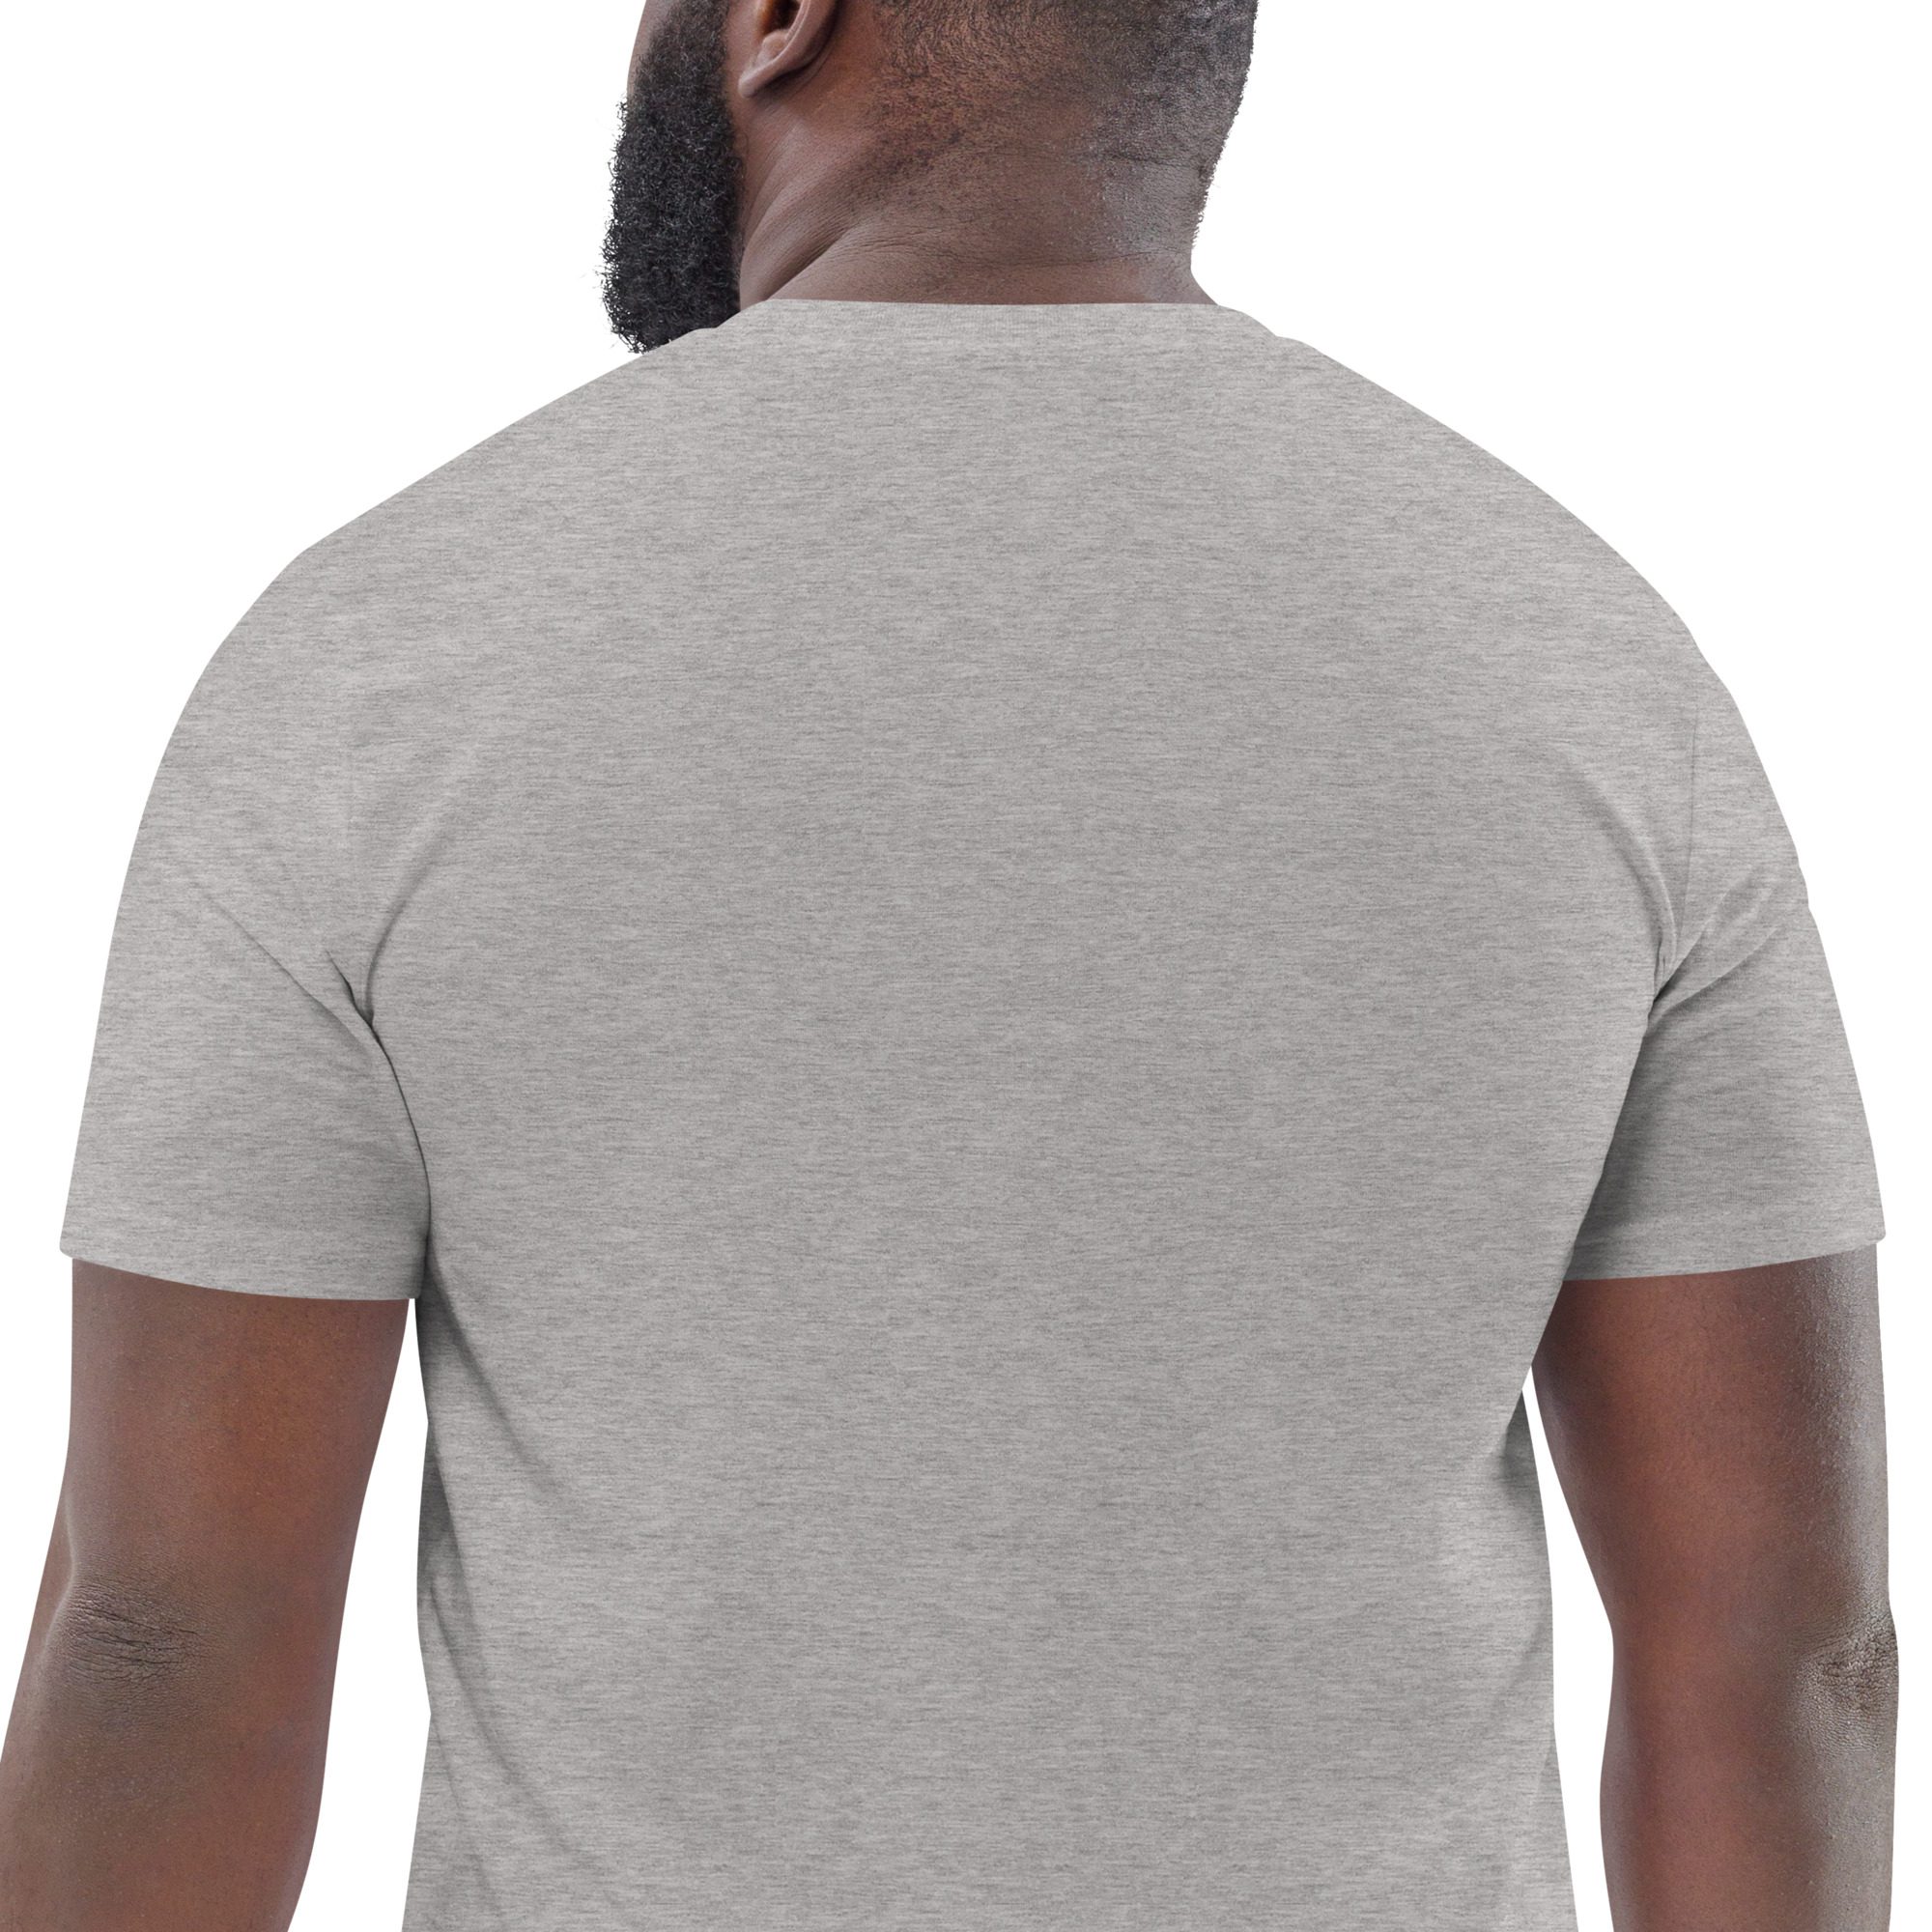 unisex organic cotton t shirt heather grey zoomed in 651ada93aa627